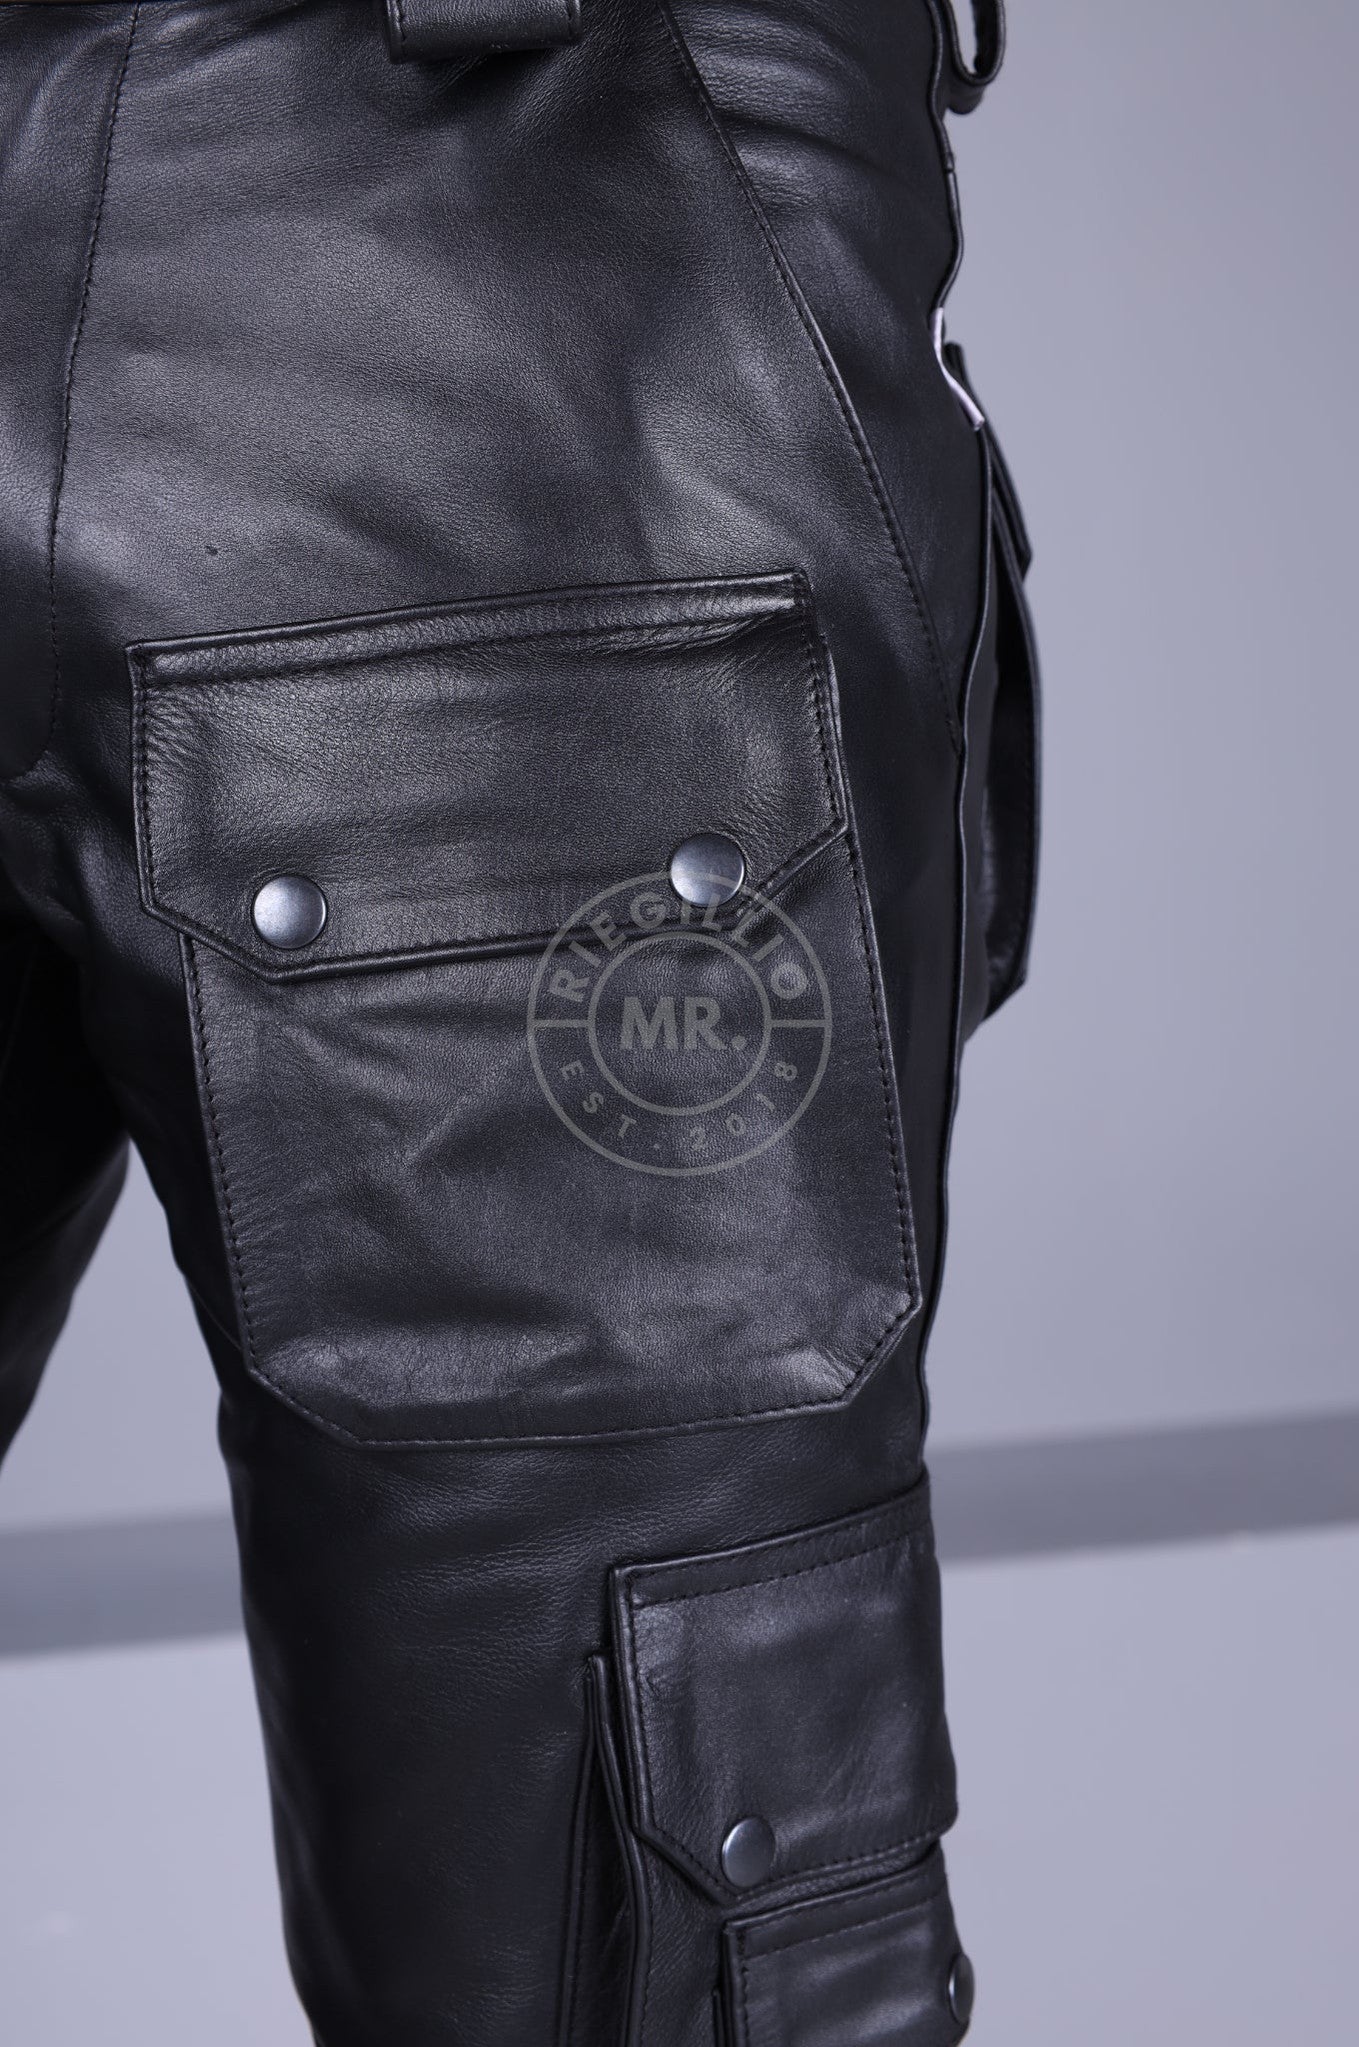 Black Leather Pants - Snap Pockets by MR. Riegillio